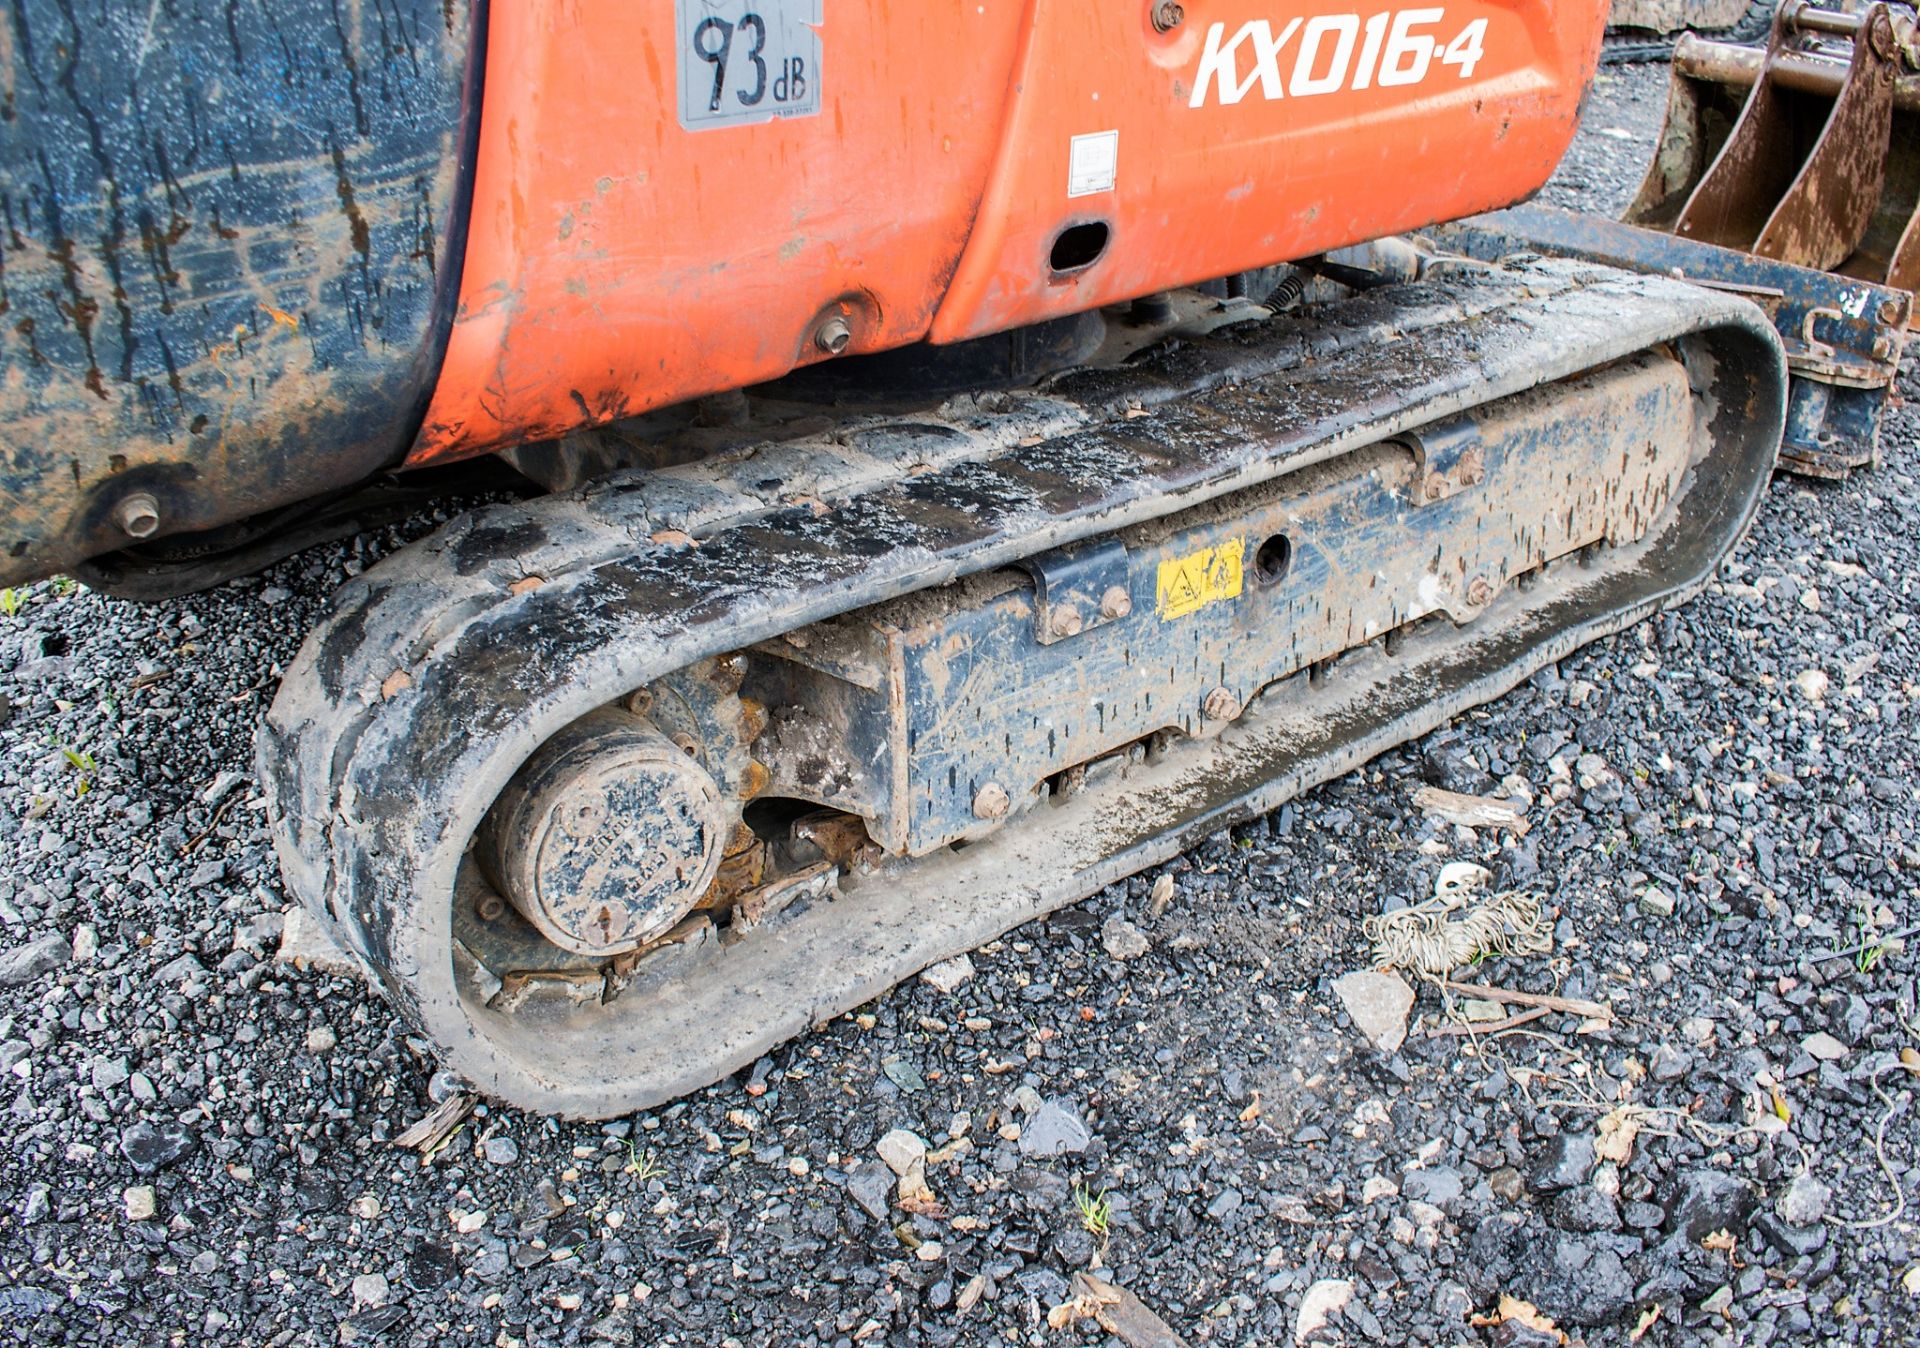 Kubota KX016-4 1.6 tonne rubber tracked mini excavator Year: 2014 S/N: 57528 Recorded Hours: 2621 - Image 10 of 19